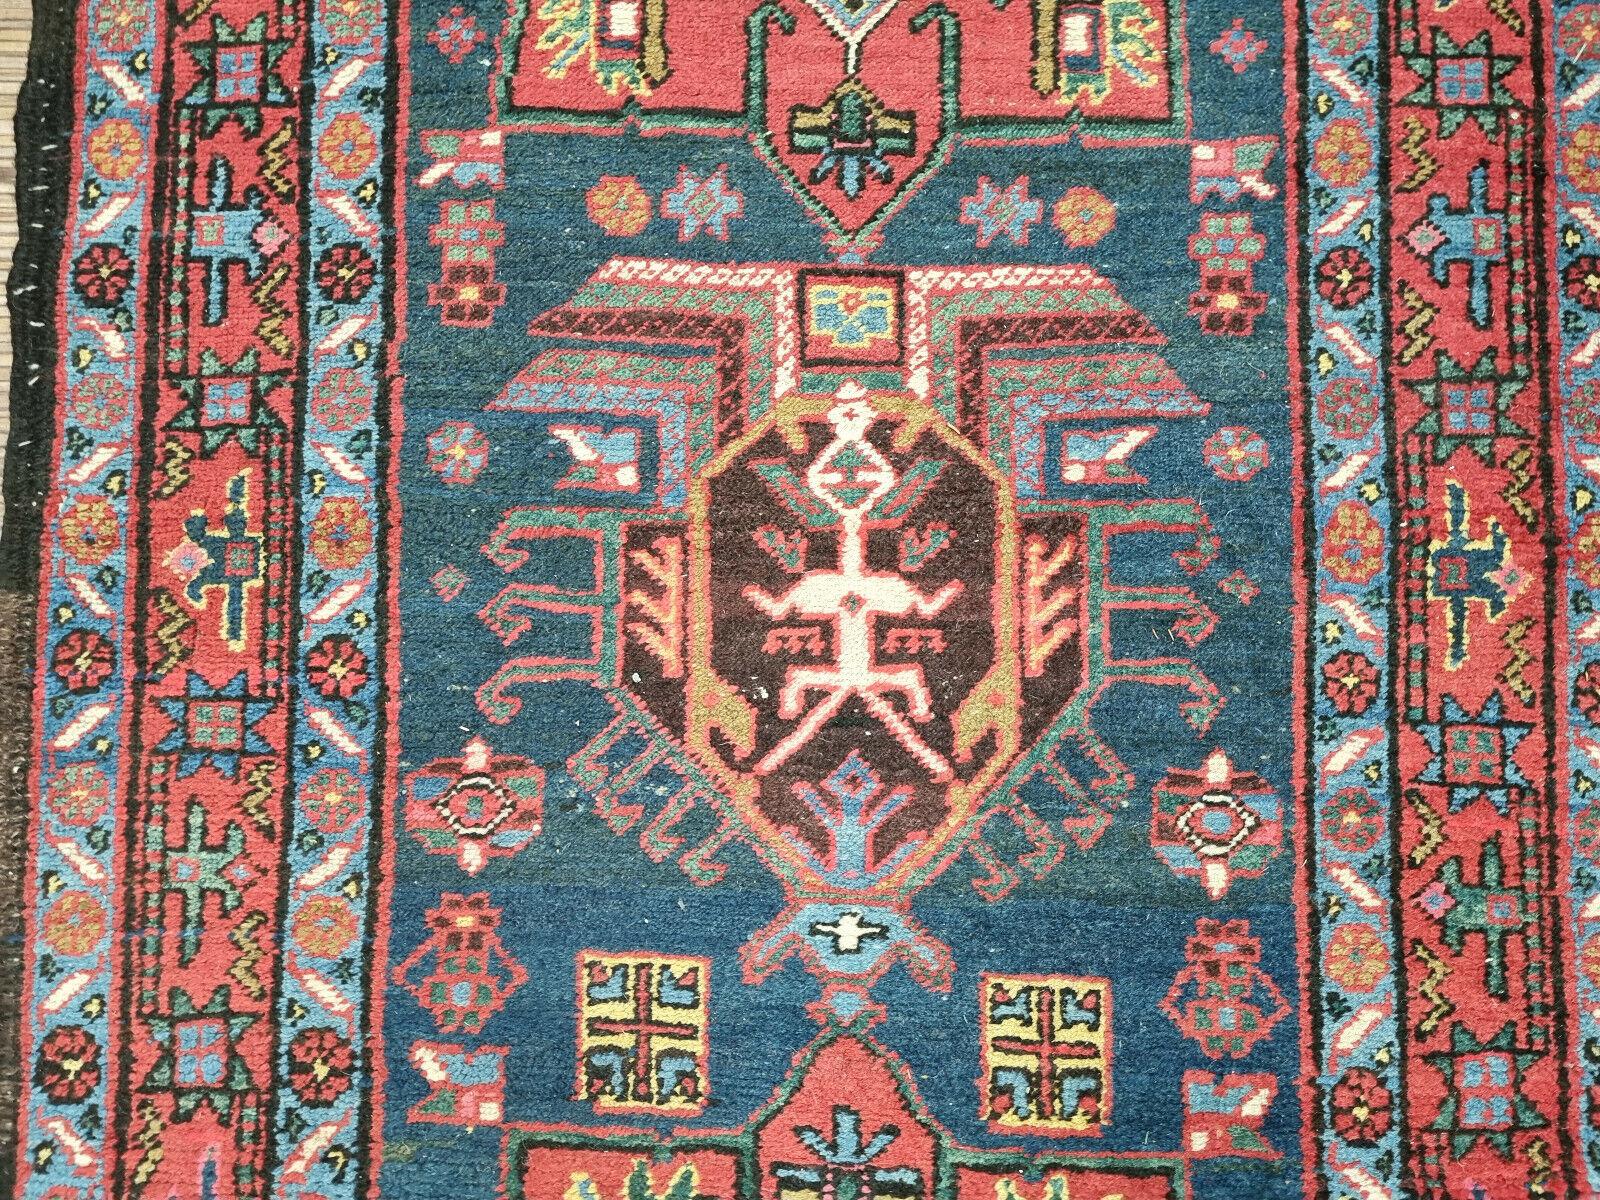 Wool Handmade Antique Persian Style Heriz Runner Rug 2.8' x 13.7', 1900s - 1D80